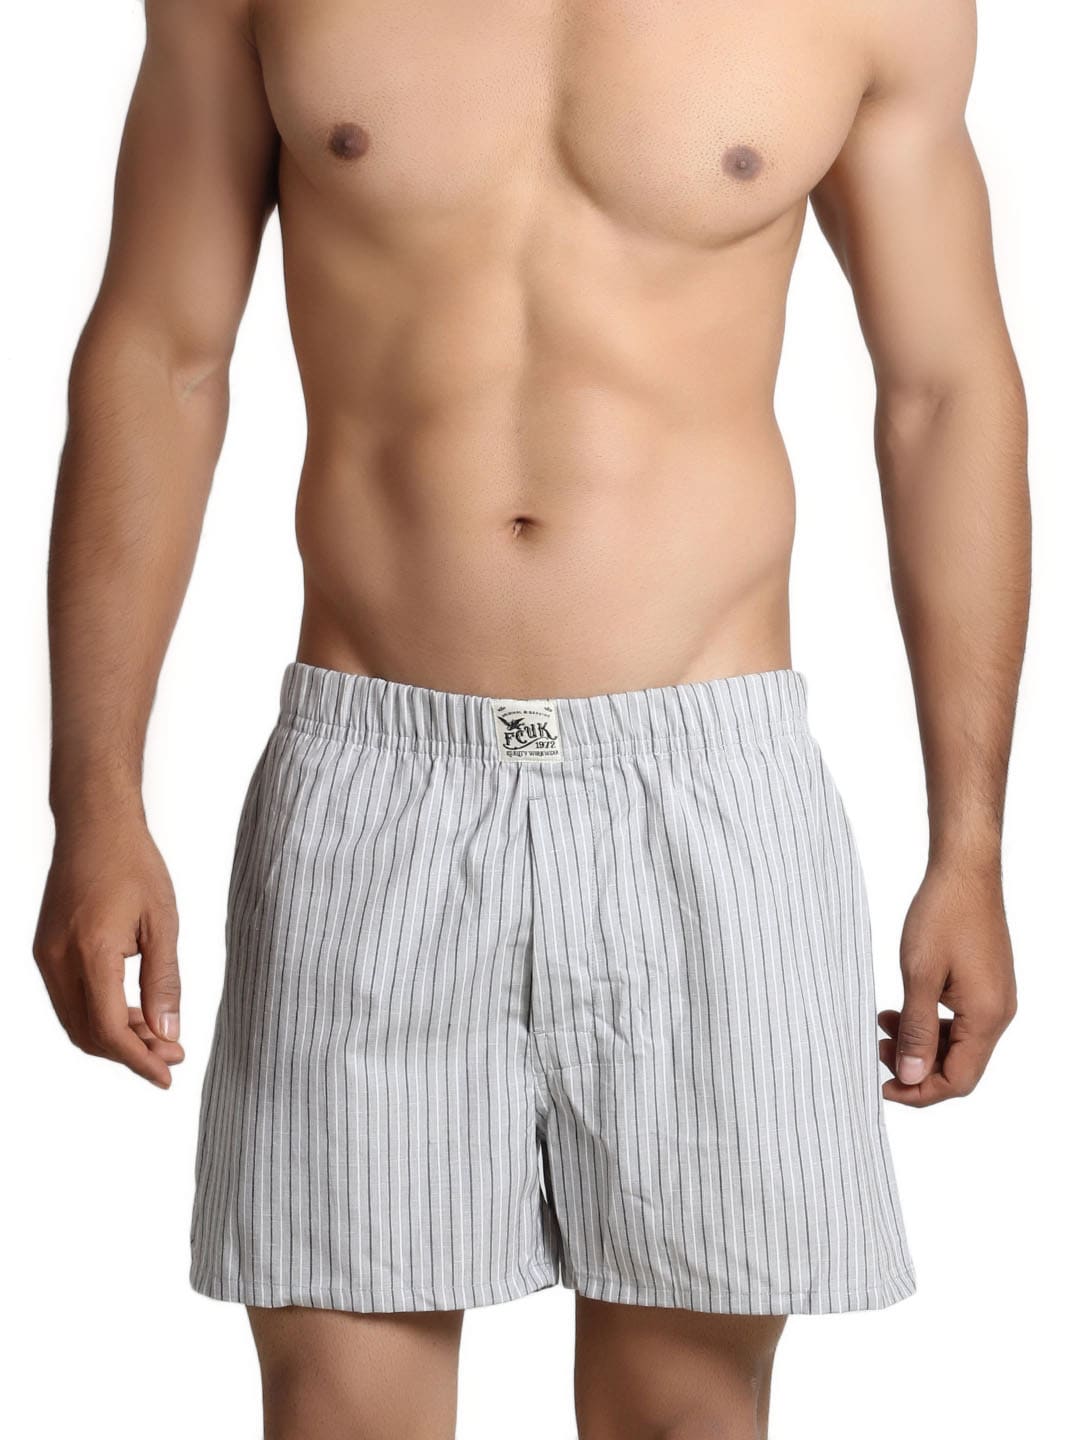 FCUK Underwear Grey Striped Boxers